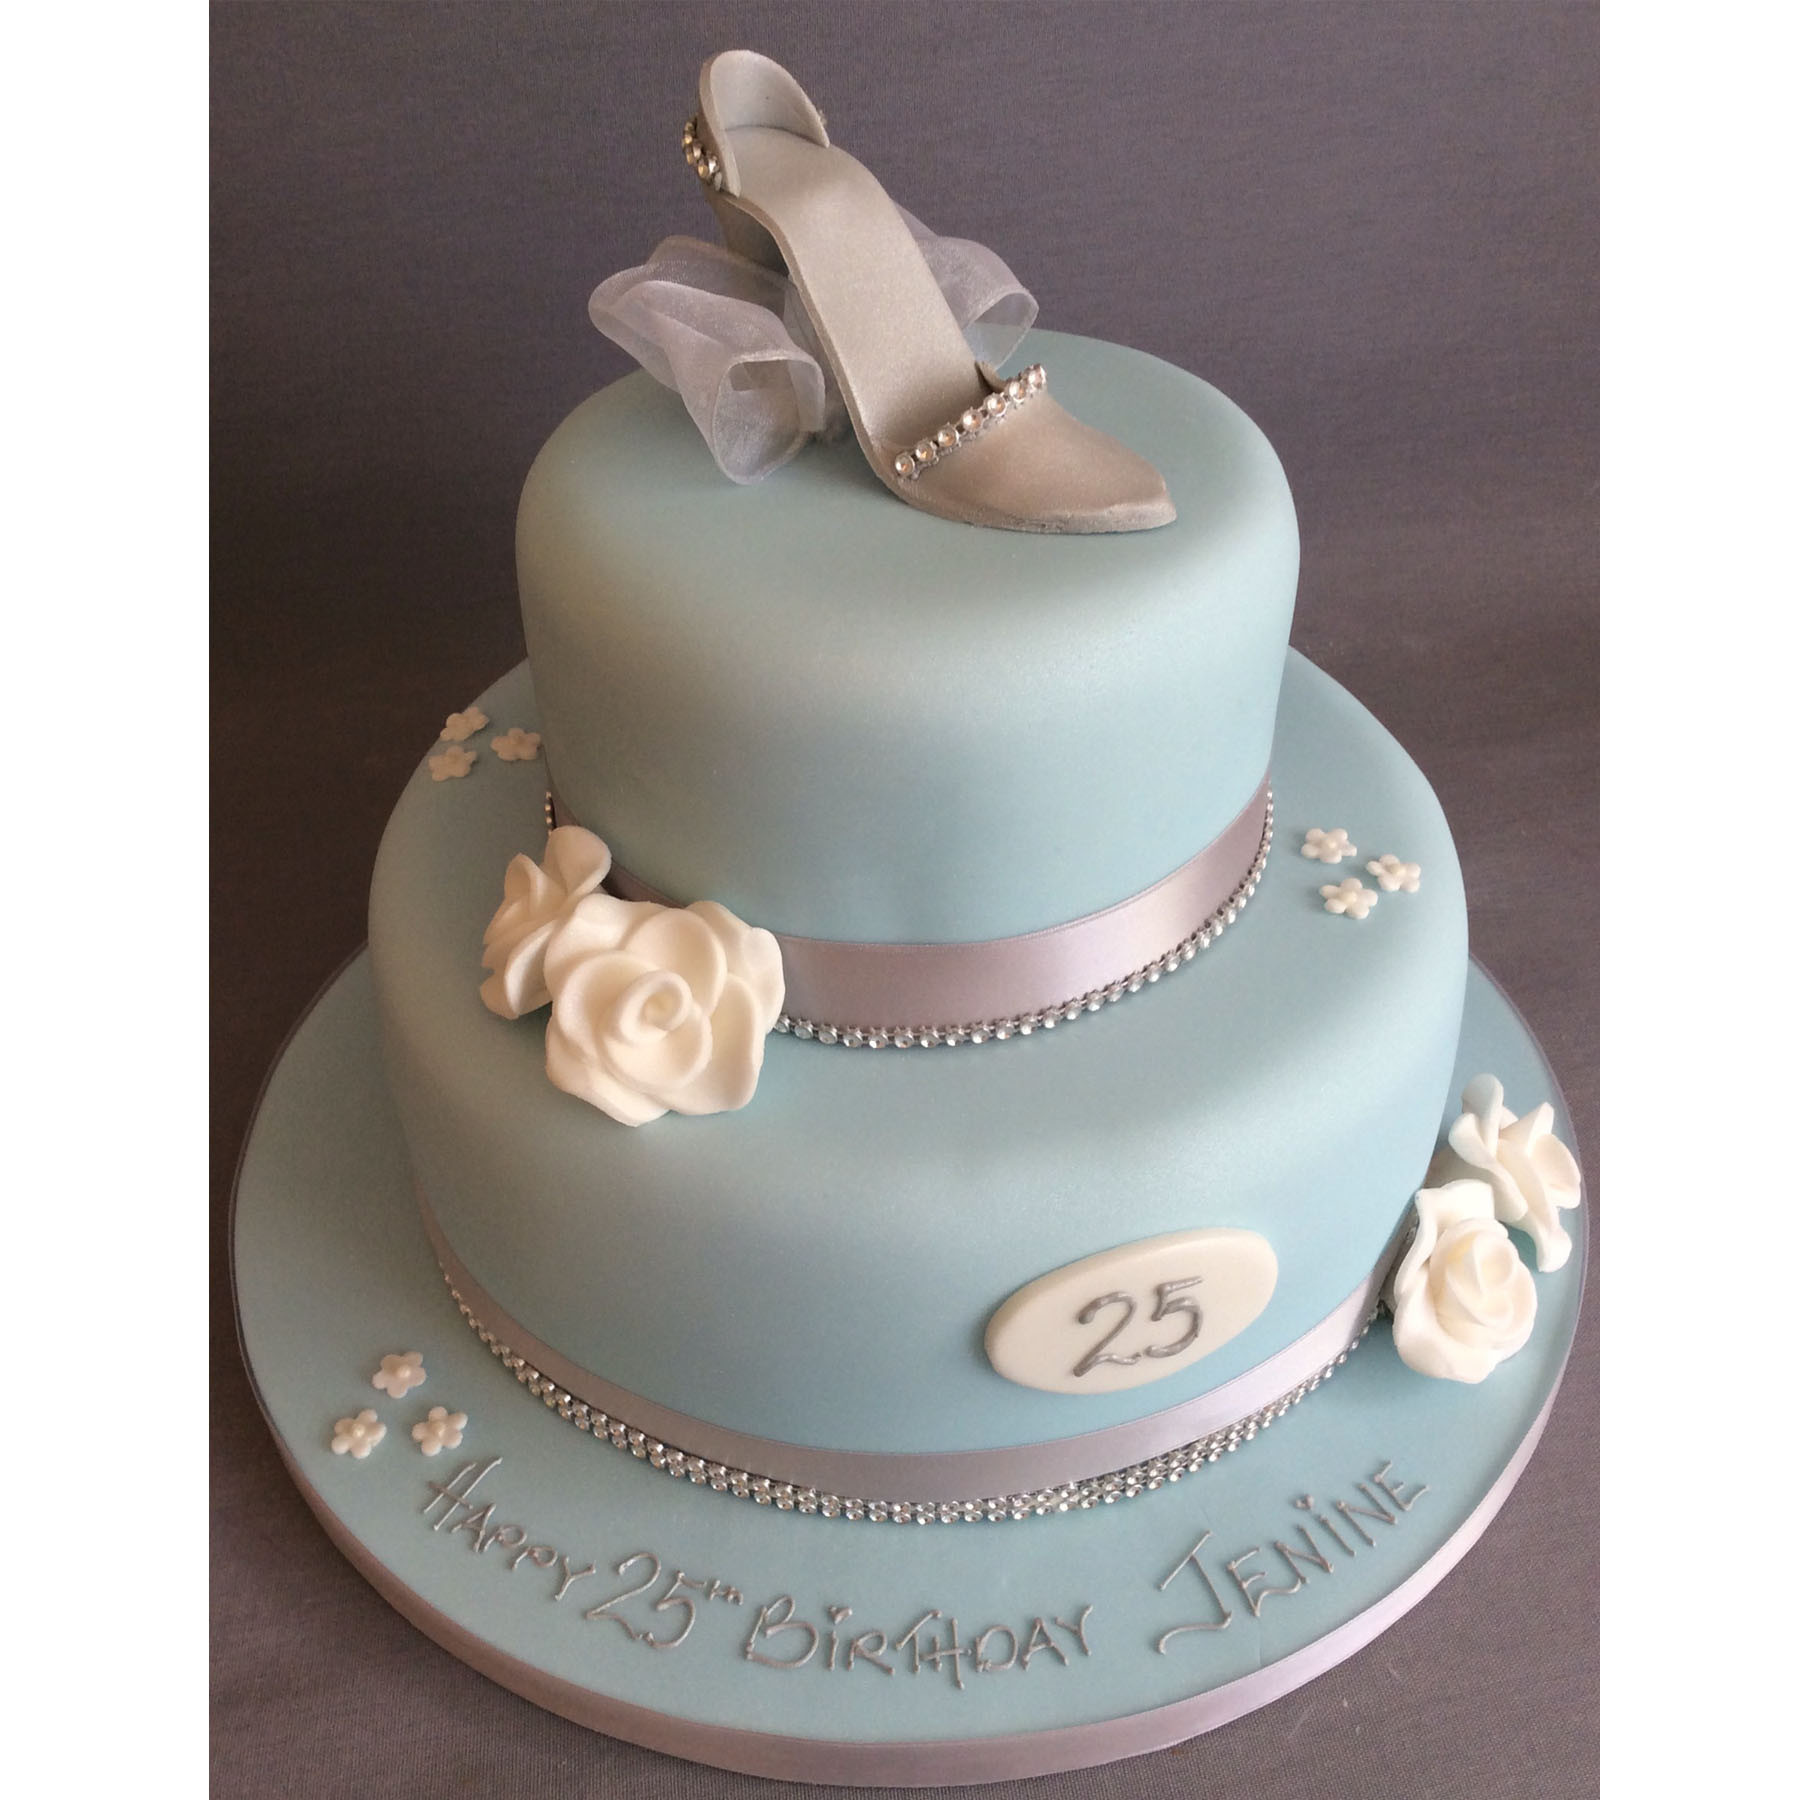 25th Birthday Cakes
 25th Birthday Cake – Ann s Designer Cakes